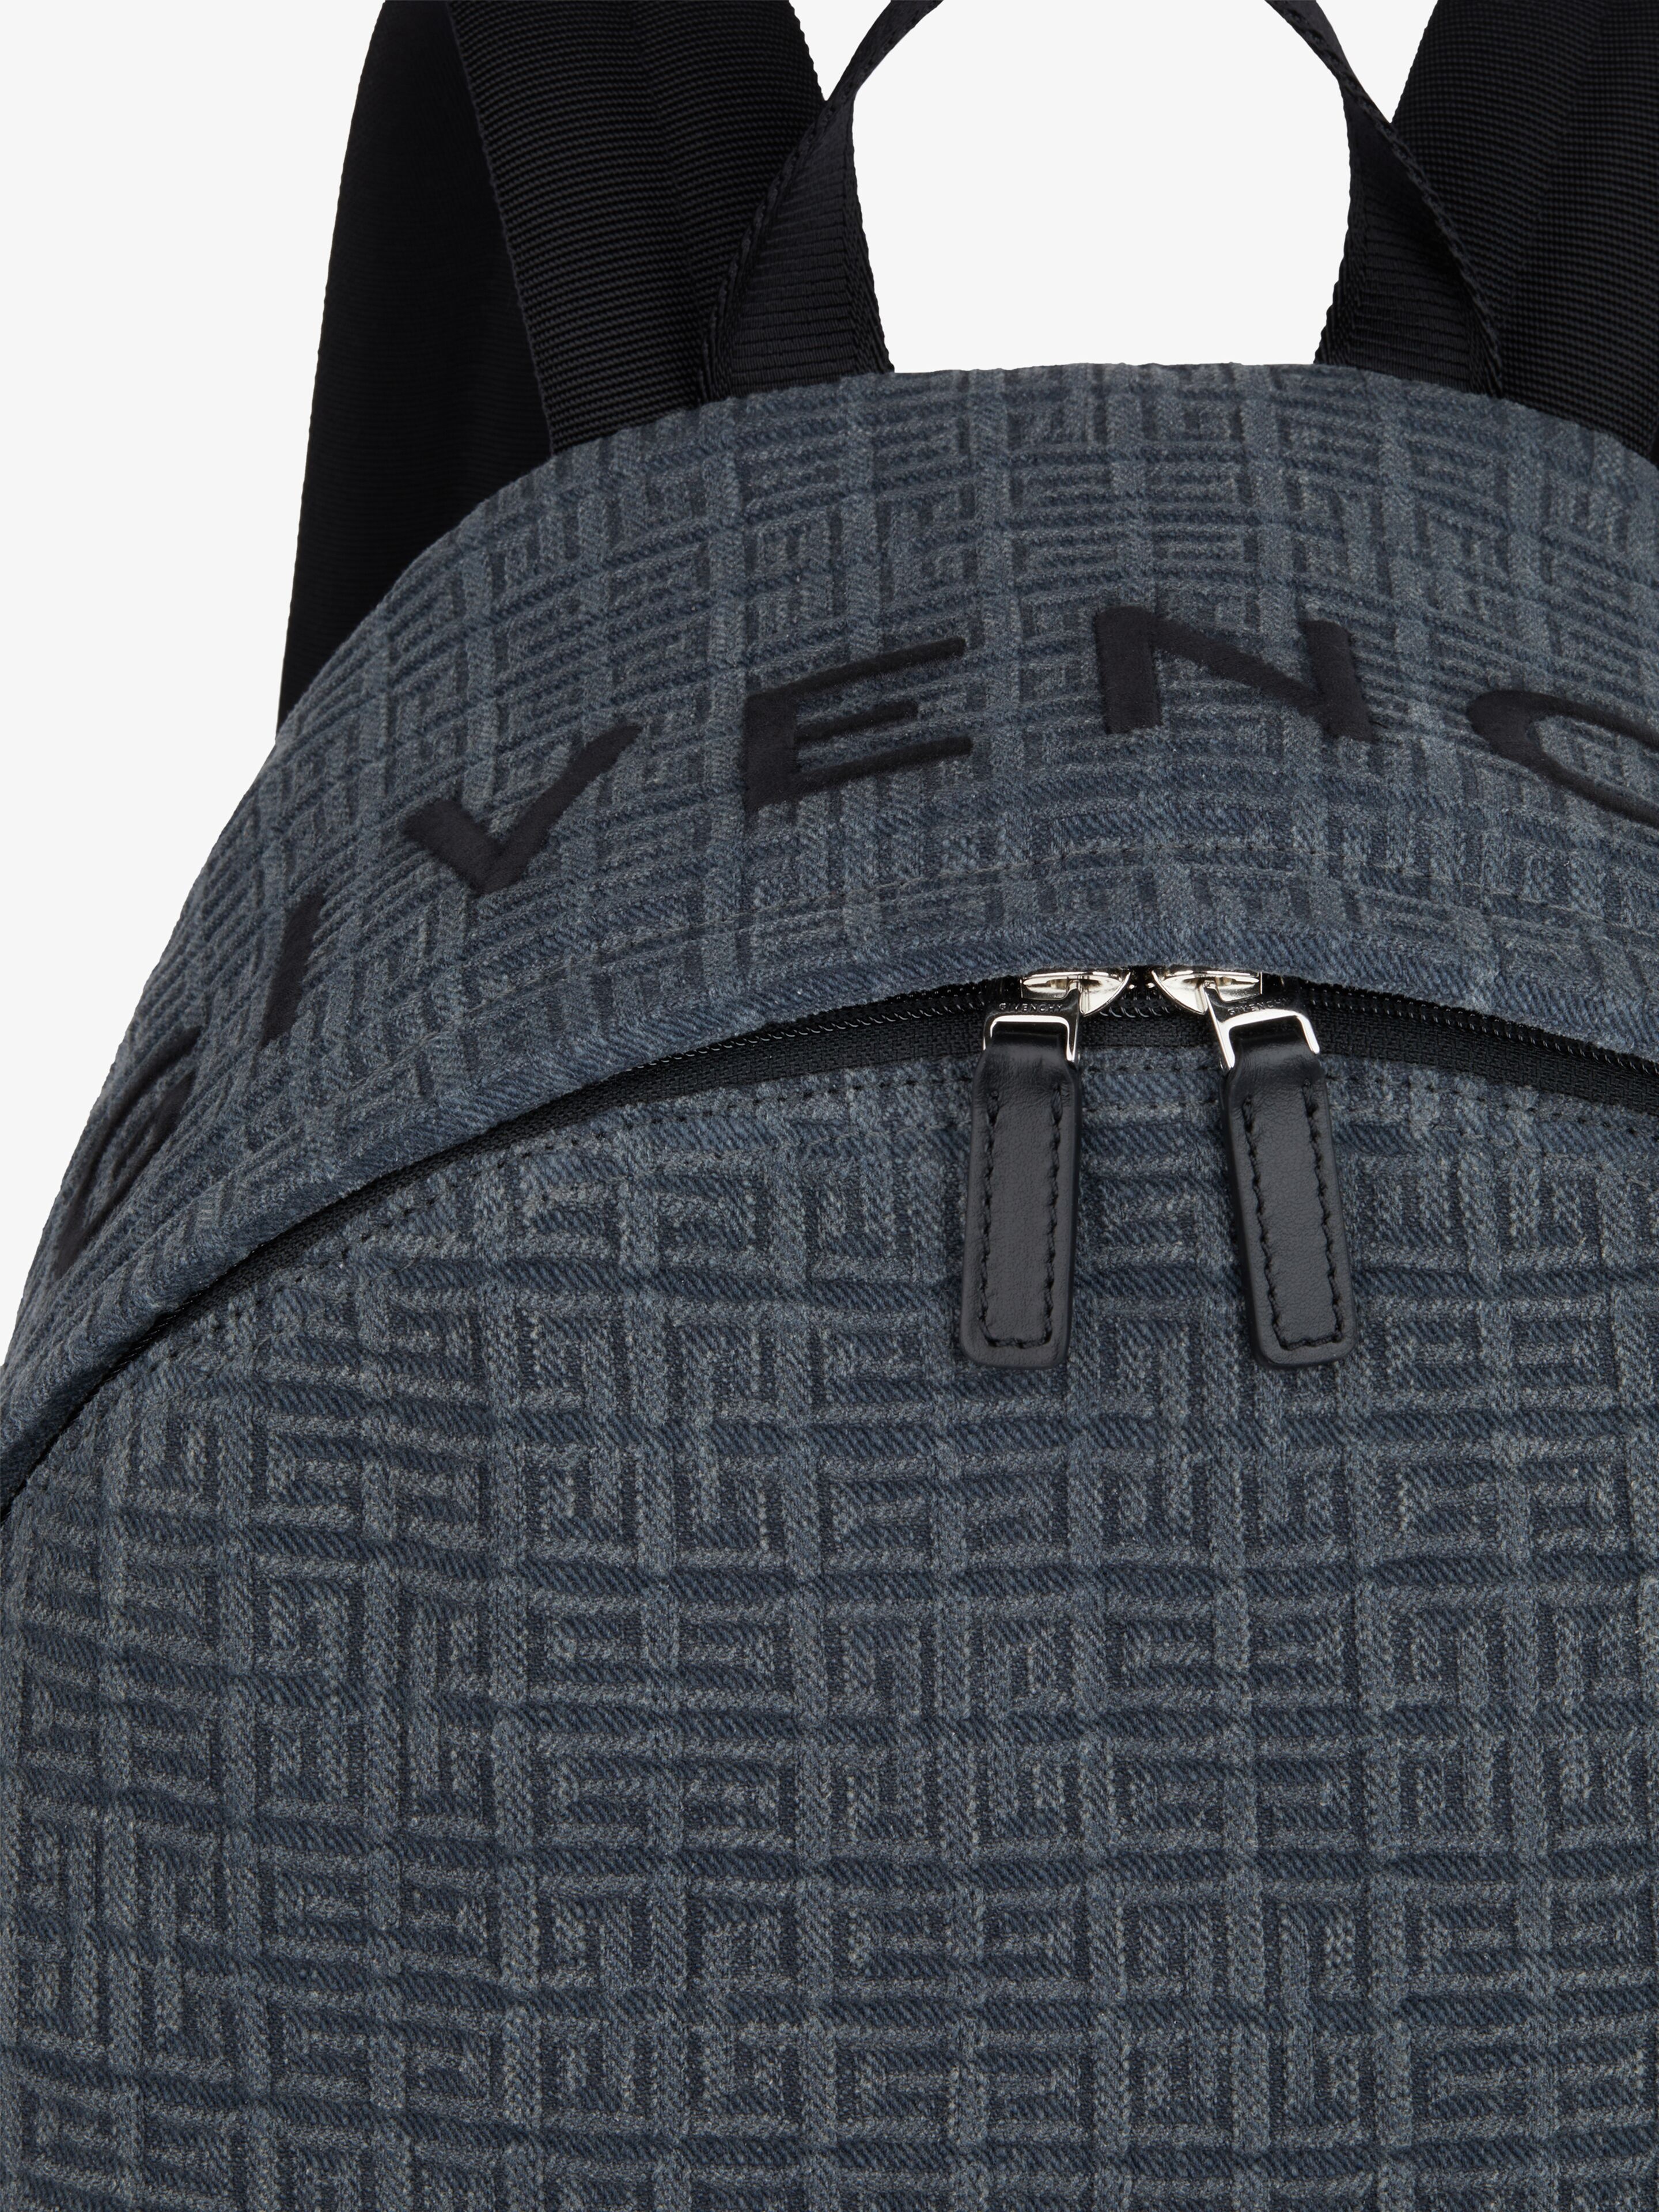 Givenchy ESSENTIAL U BACKPACK IN 4G DENIM | REVERSIBLE